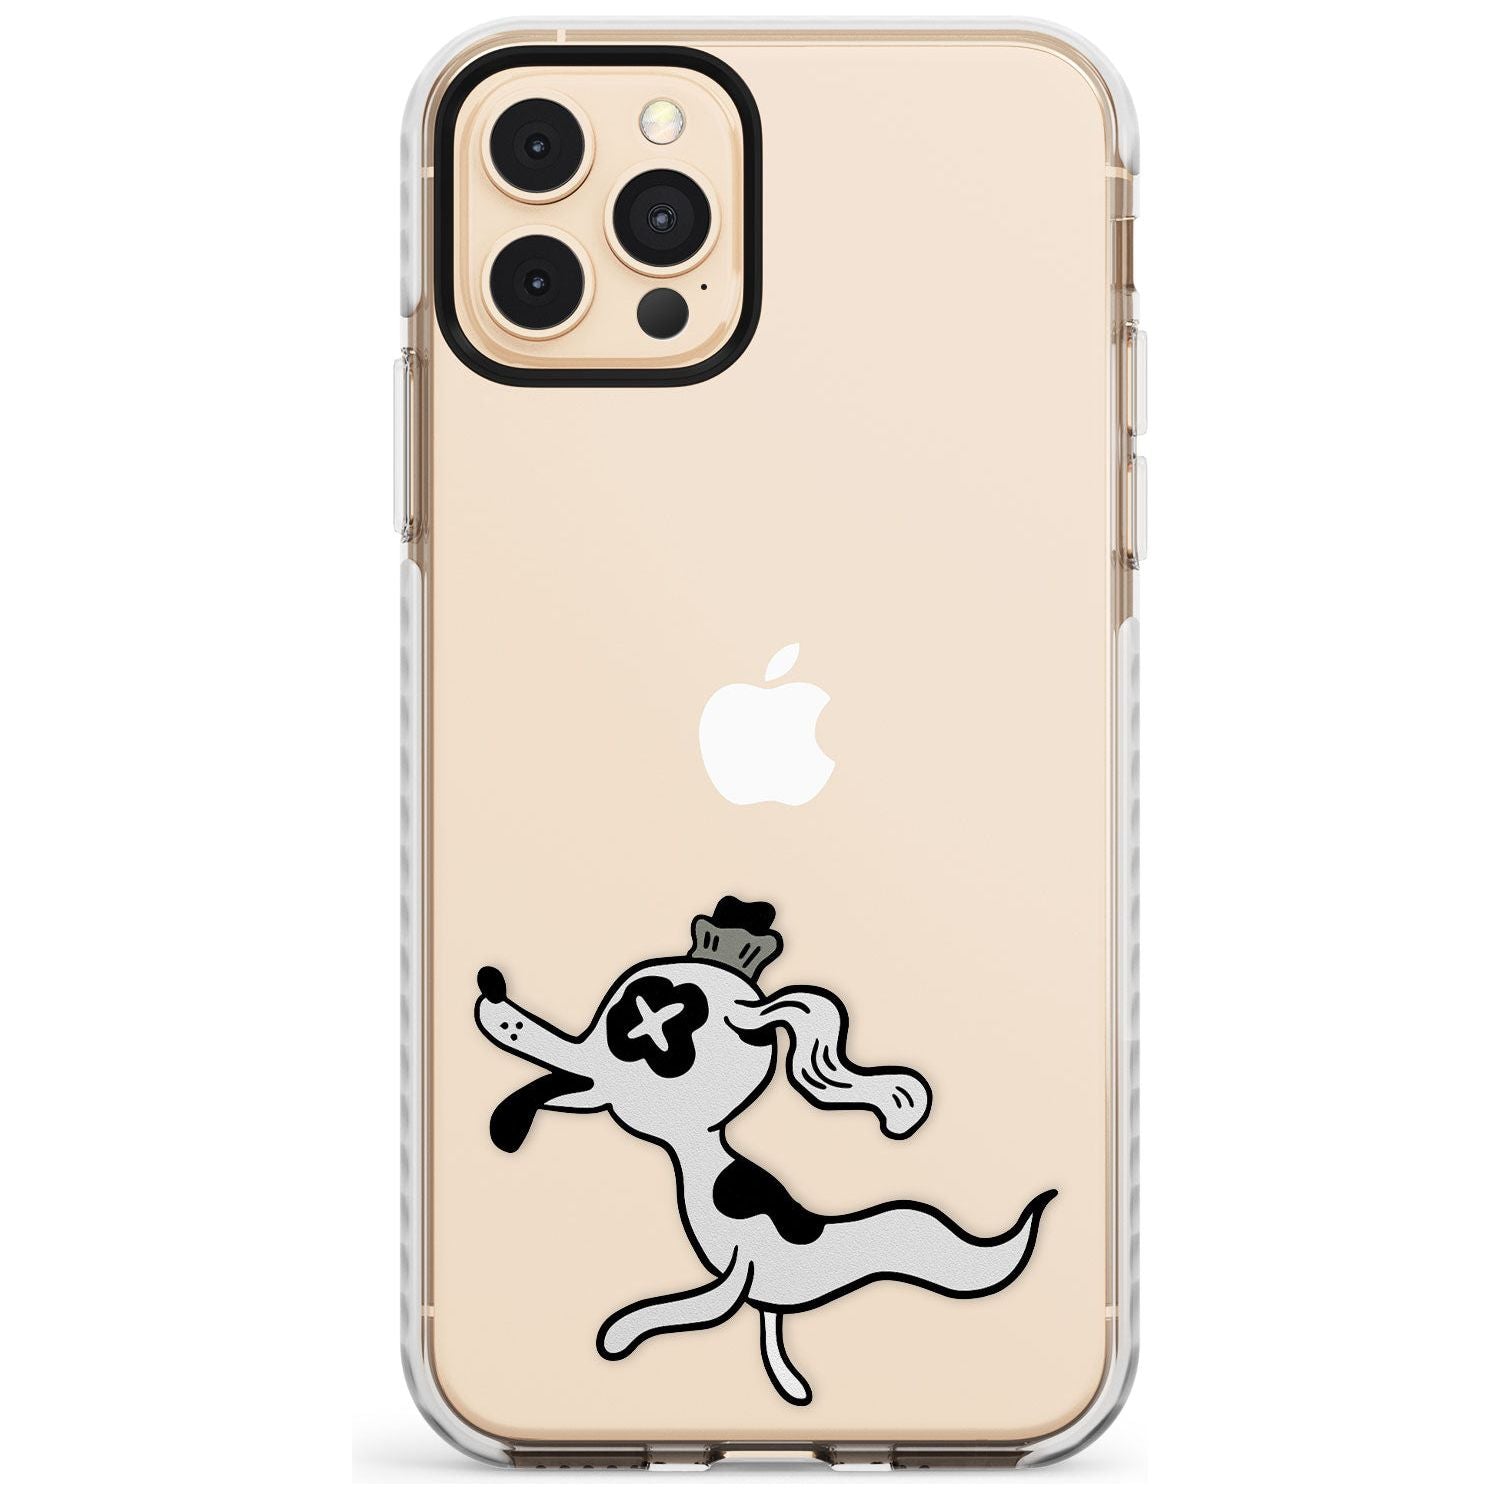 Dog Spirit Impact Phone Case for iPhone 11 Pro Max